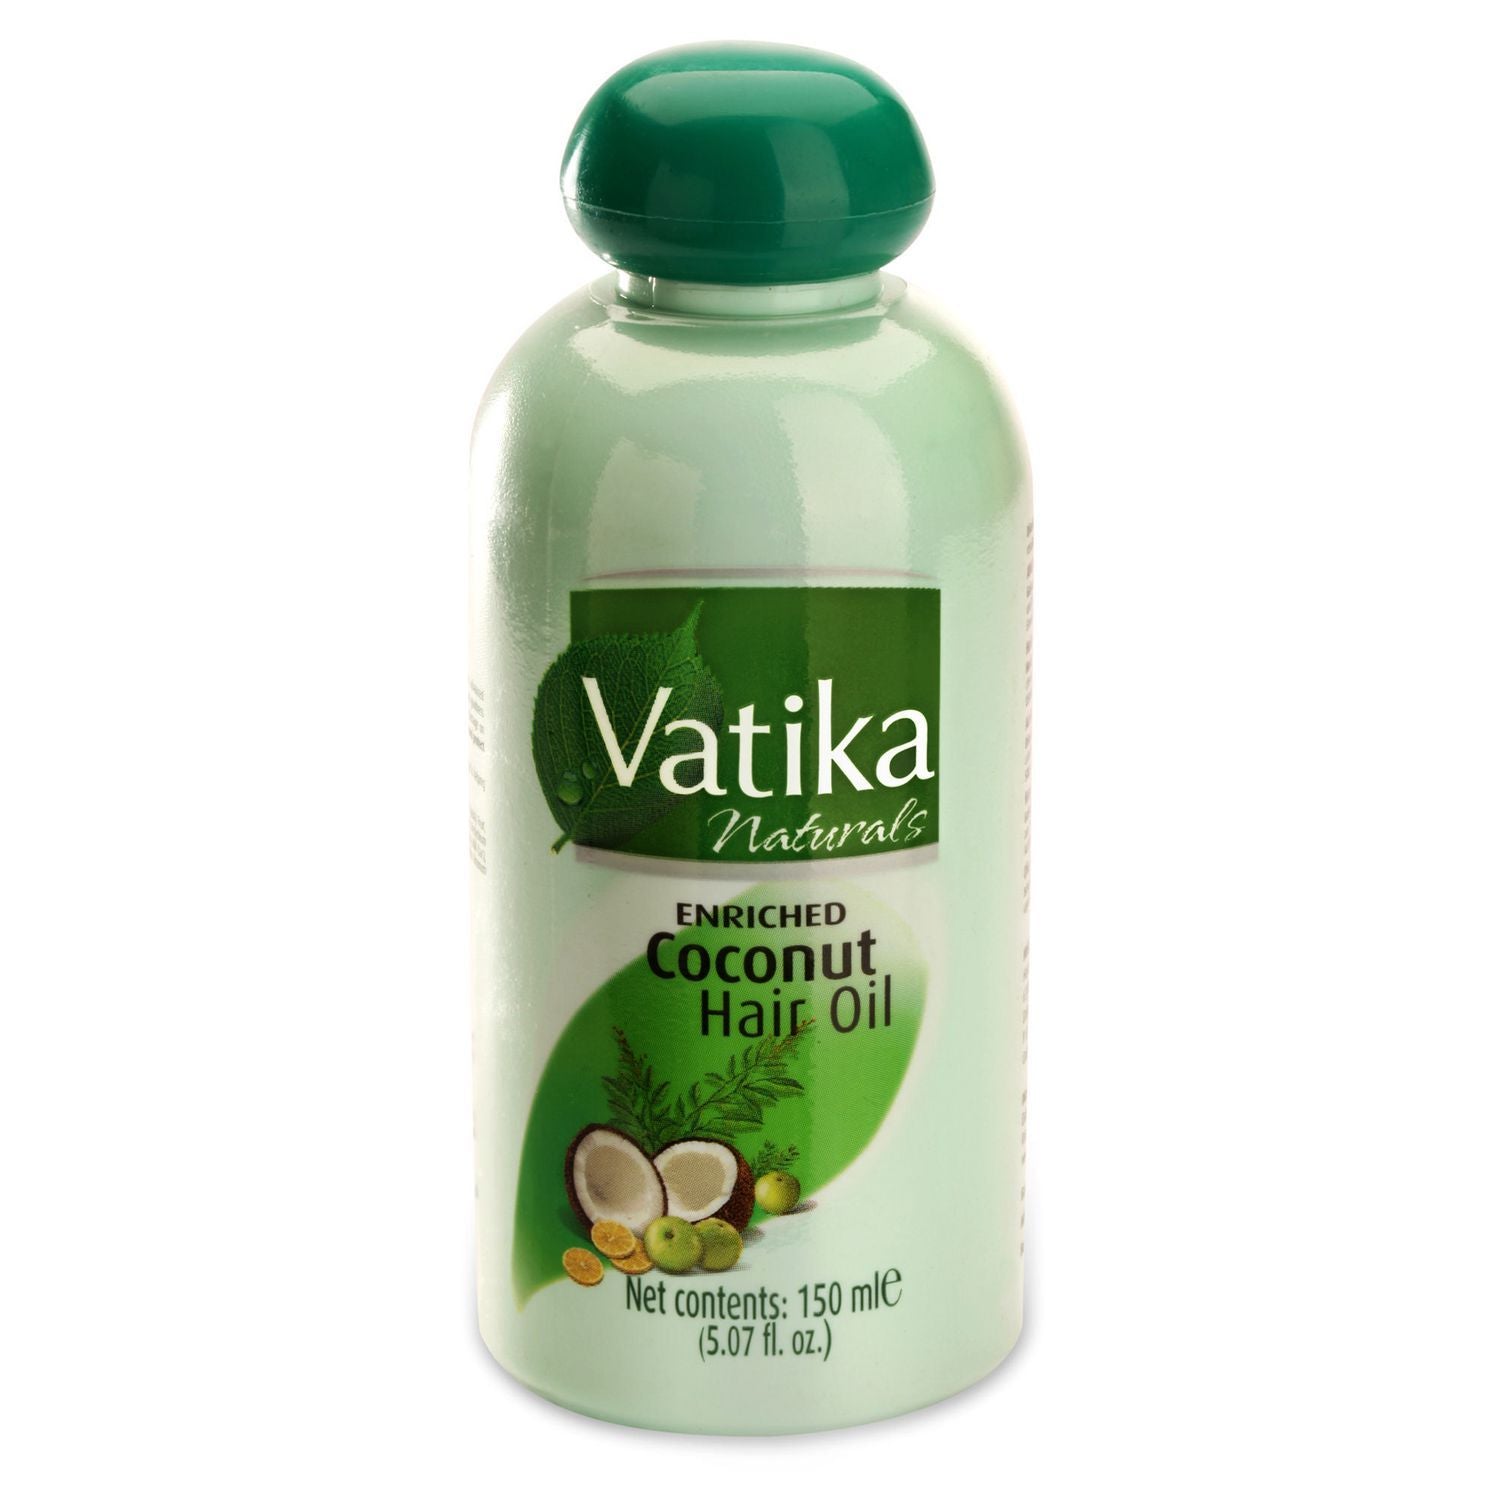 Vatika coconut hair oil 150ml - SaveCo Online Ltd